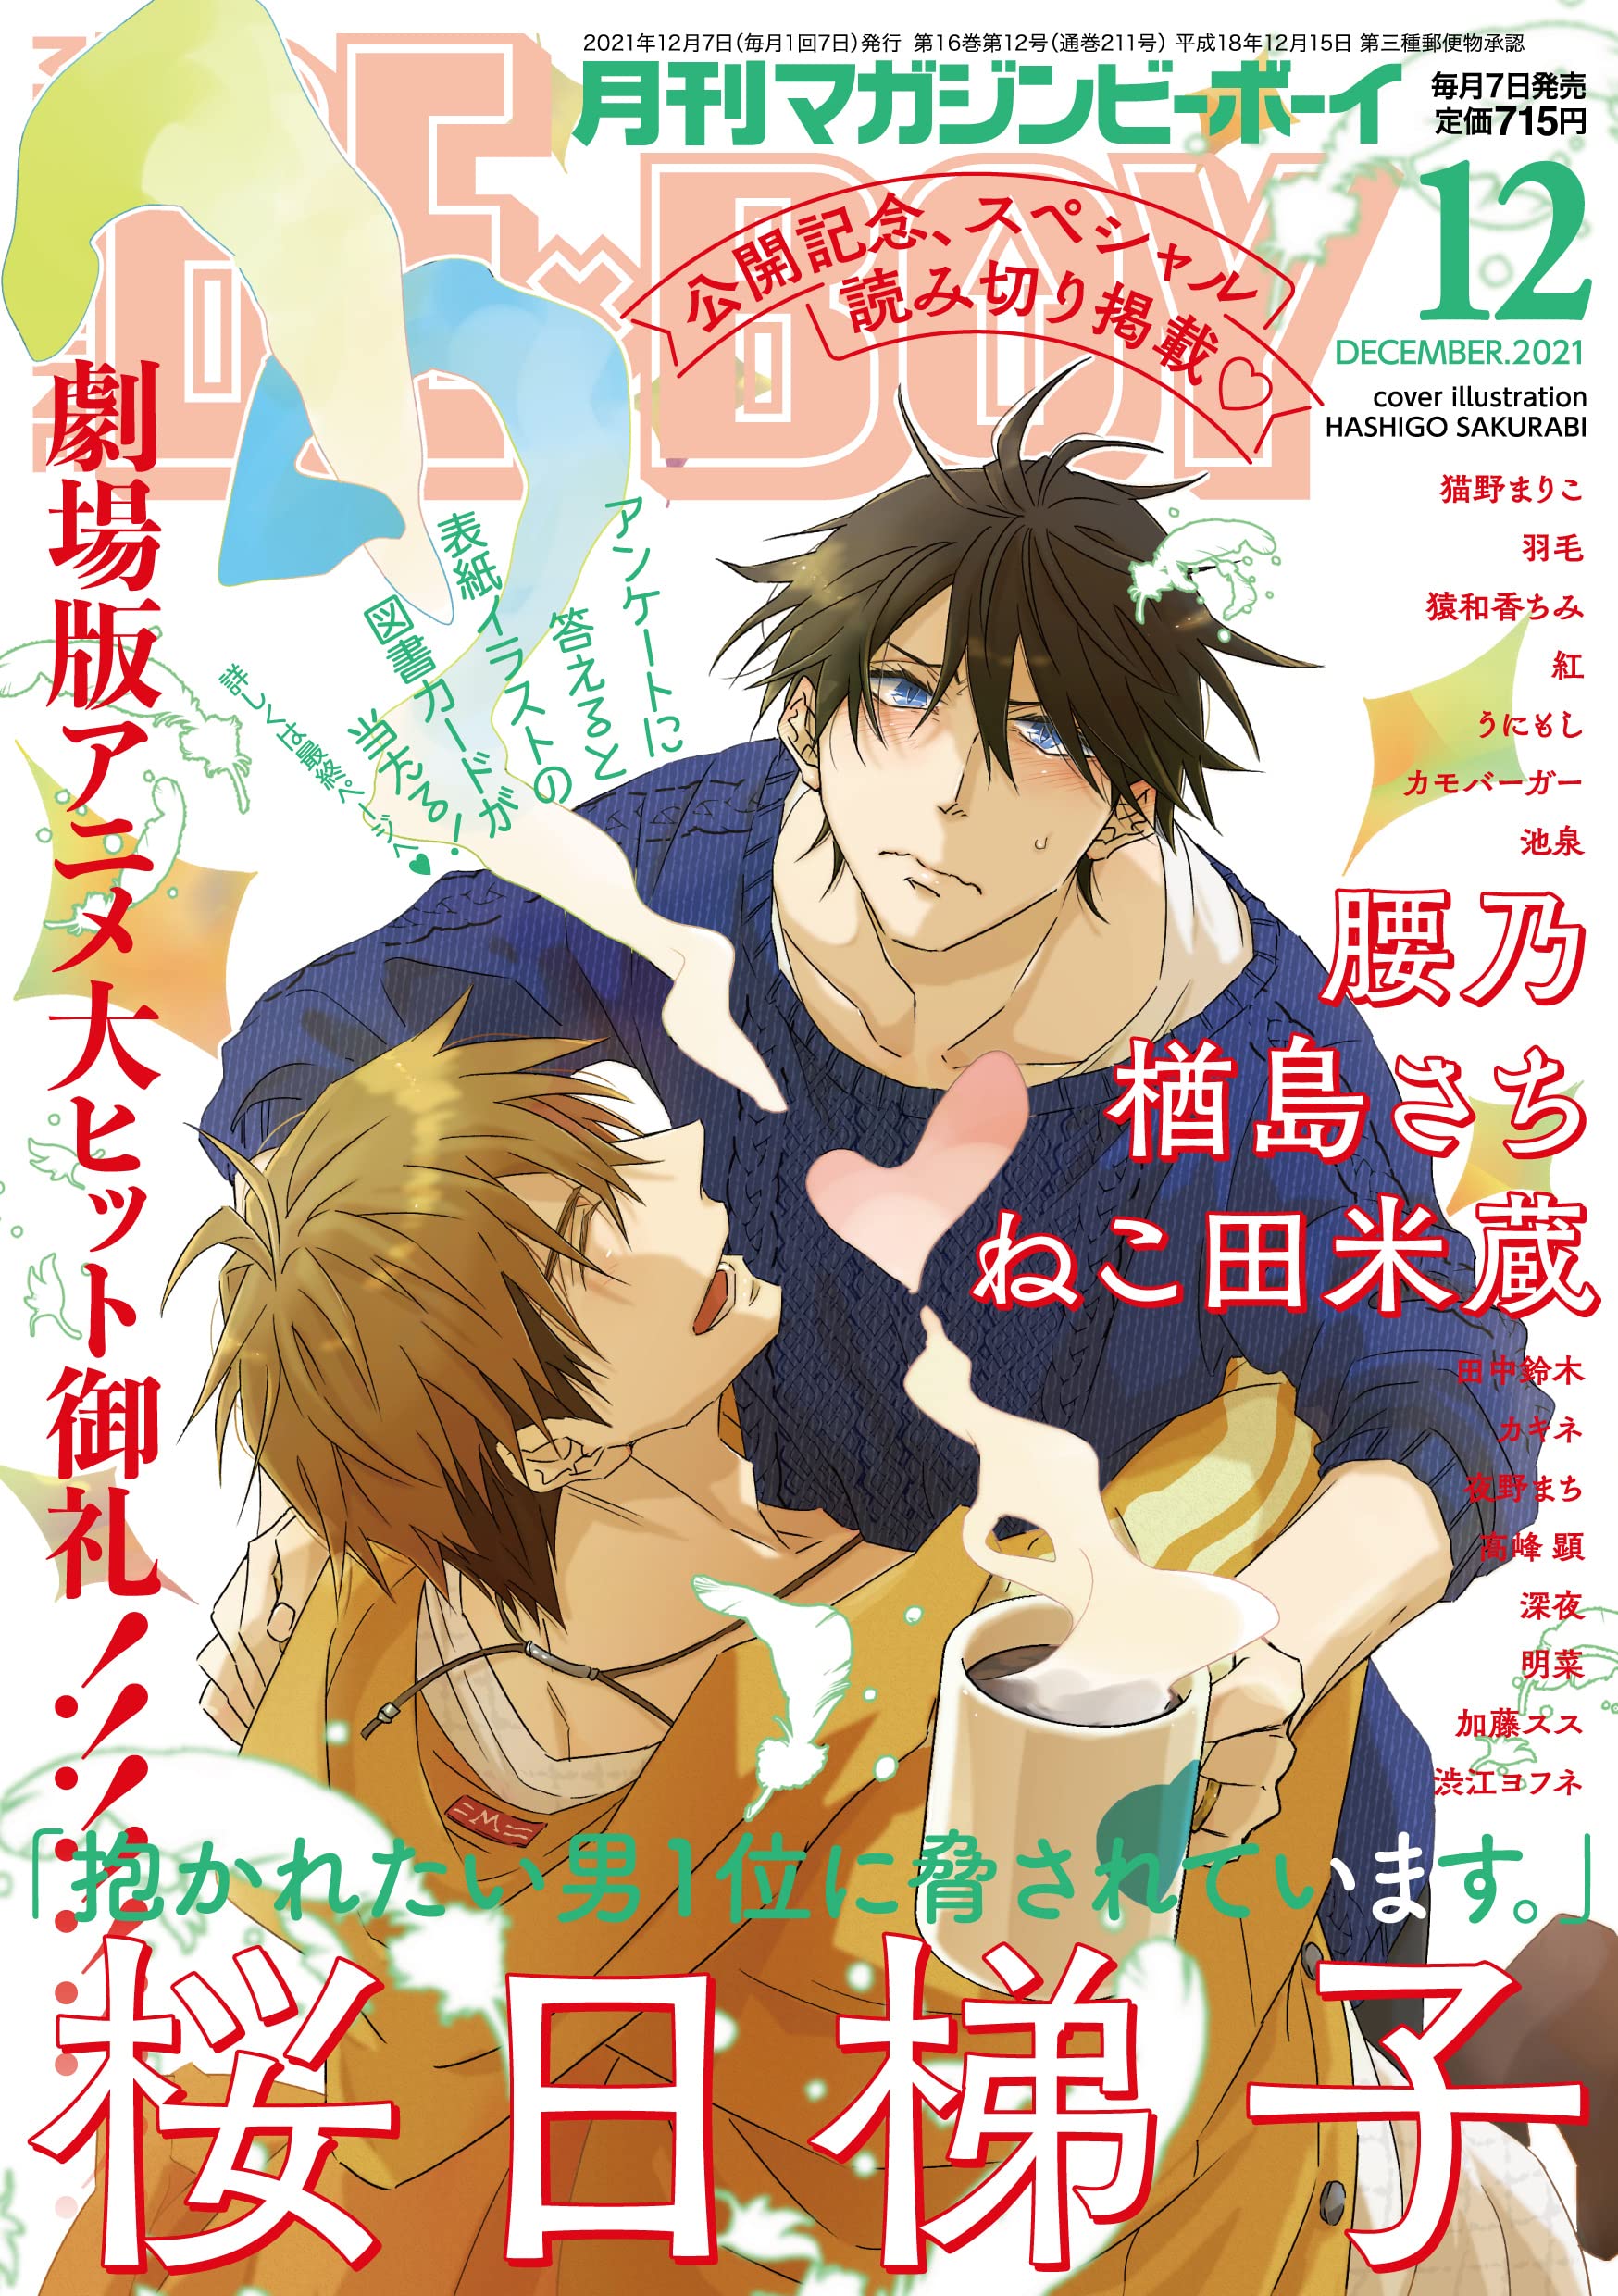 Boys Love (Yaoi) Magazine - MAGAZINE BE×BOY (MAGAZINE BE×BOY (マガジンビーボーイ)2021年12月号[雑誌]) / Takamine Akira & Tanaka Suzuki & Sakurabi Hashigo & 紅 & Nekota Yonezou